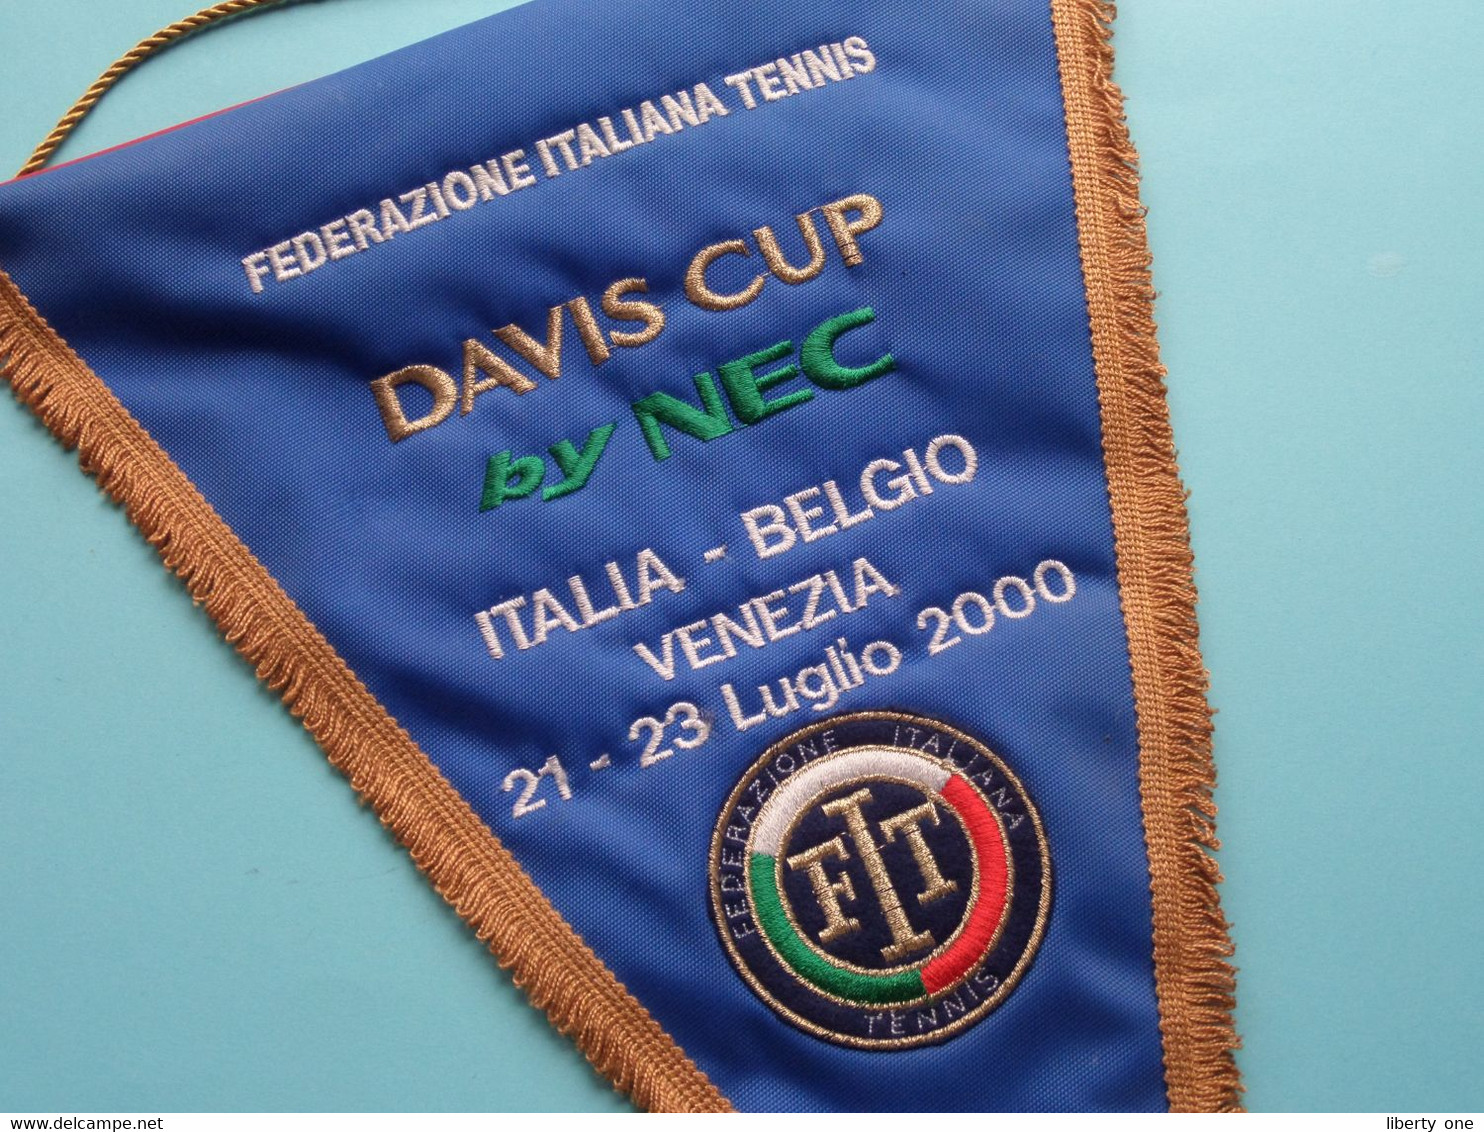 Federazione ITALIANA Tennis DAVIS CUP By NEC - ITALIA / BELGIO - 2000 ( See / Voir SCAN ) Wimpel - Pennant - Fanion ! - Apparel, Souvenirs & Other